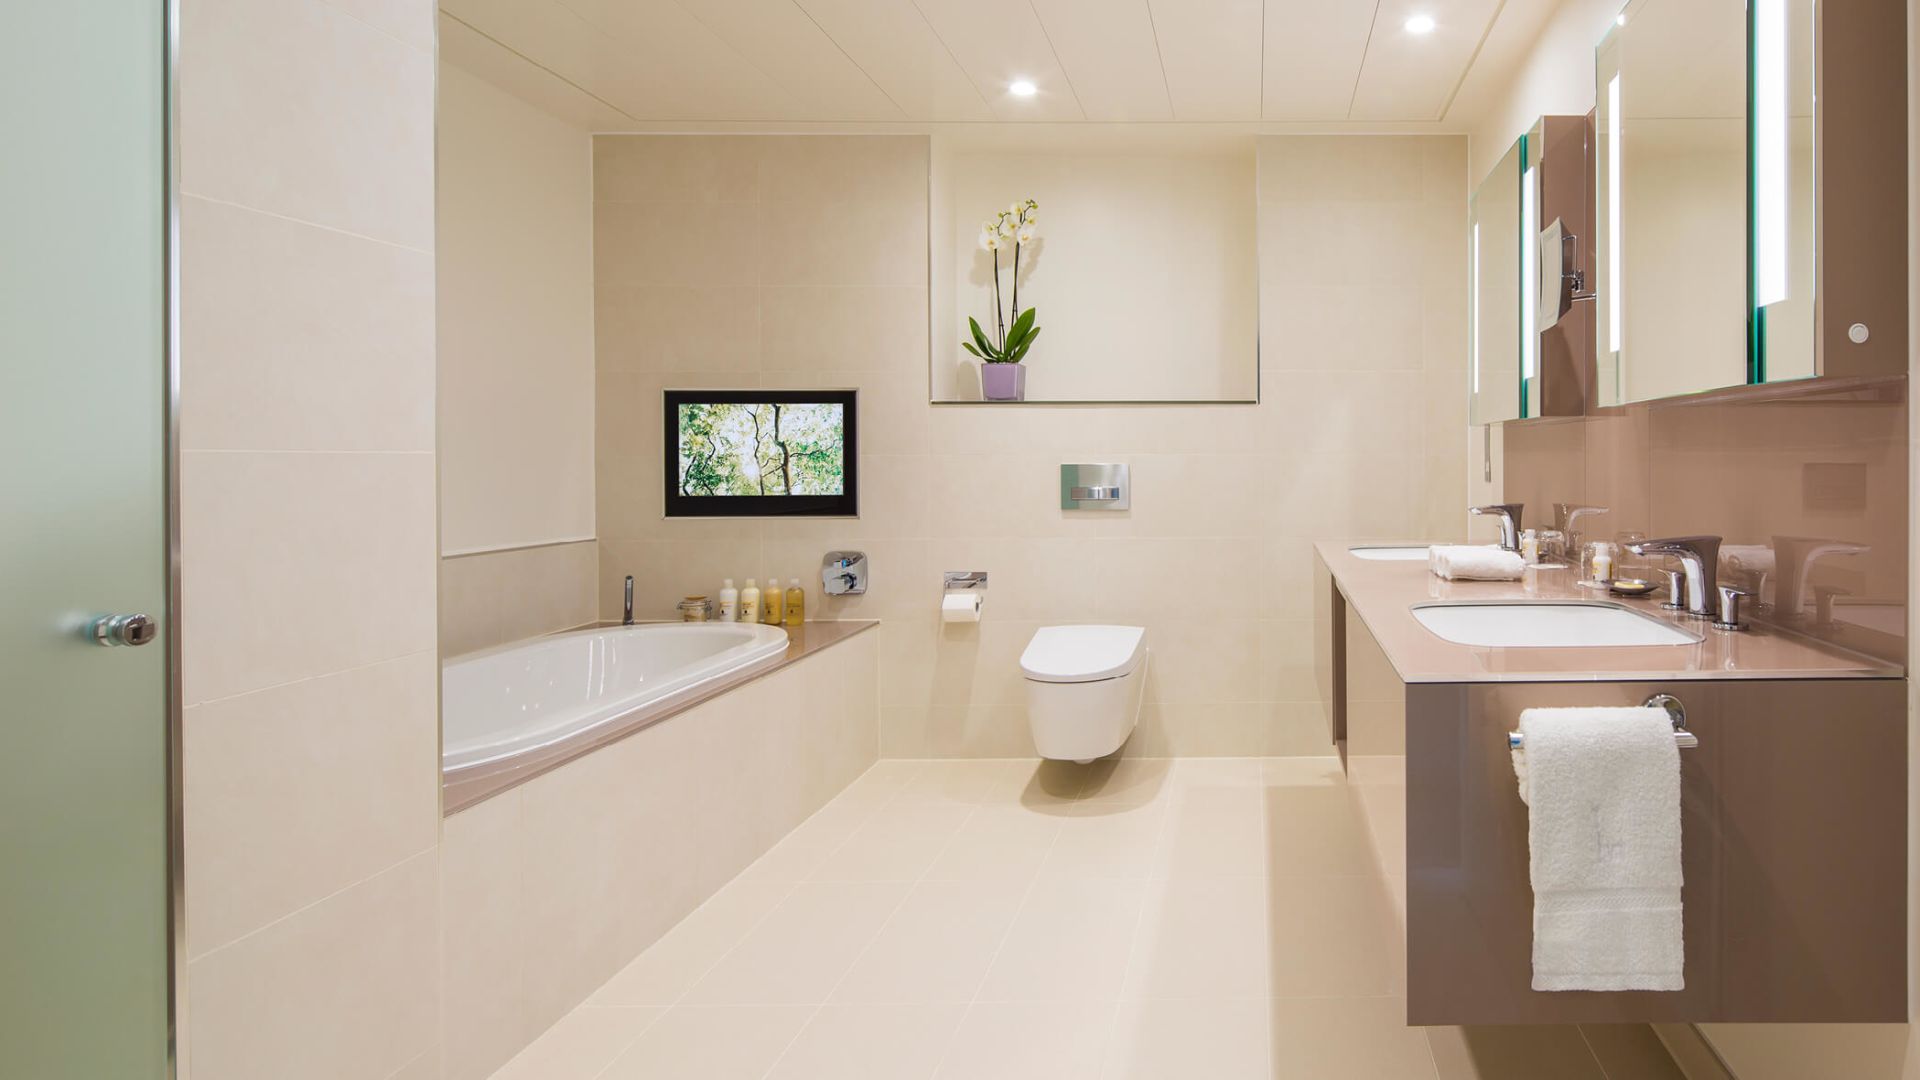 Penthouse Suite Bathroom - Image